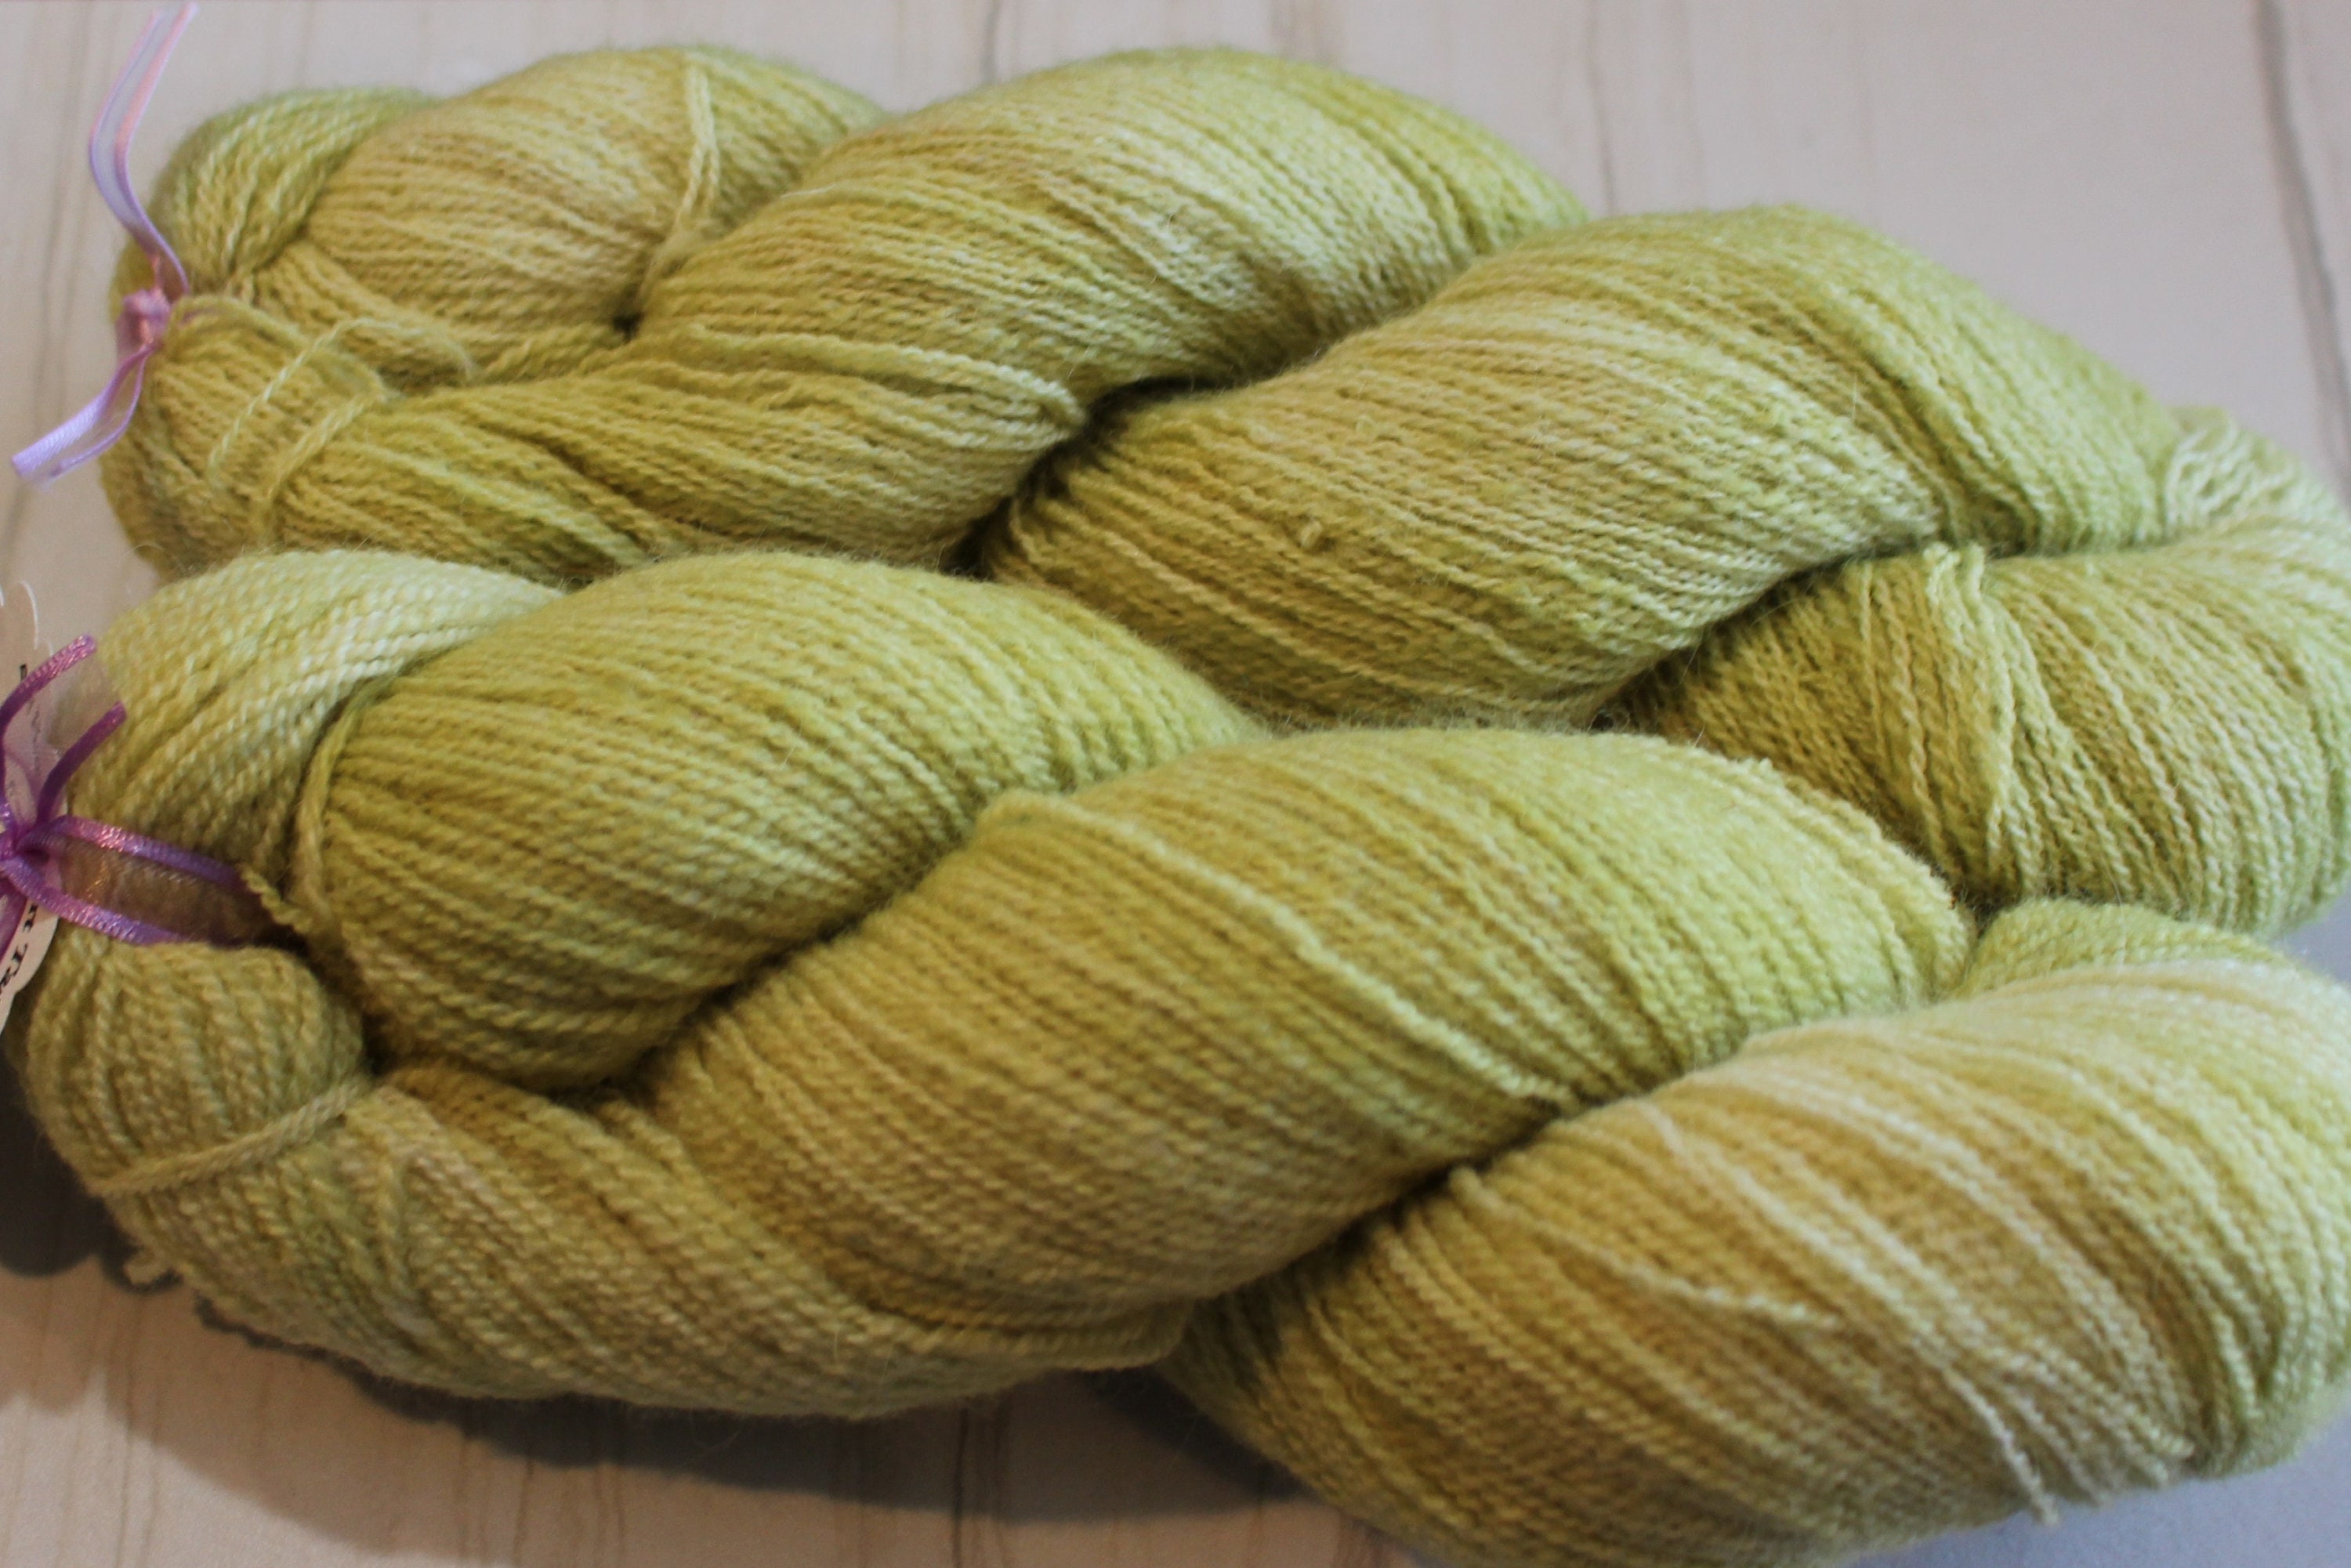 Silk 30/2 Weight Yarn, Cobweb Lace Yarn, Silk Yarn, Weaving Yarn, Crochet  Yarn, Natural, Undyed, Ivory, 